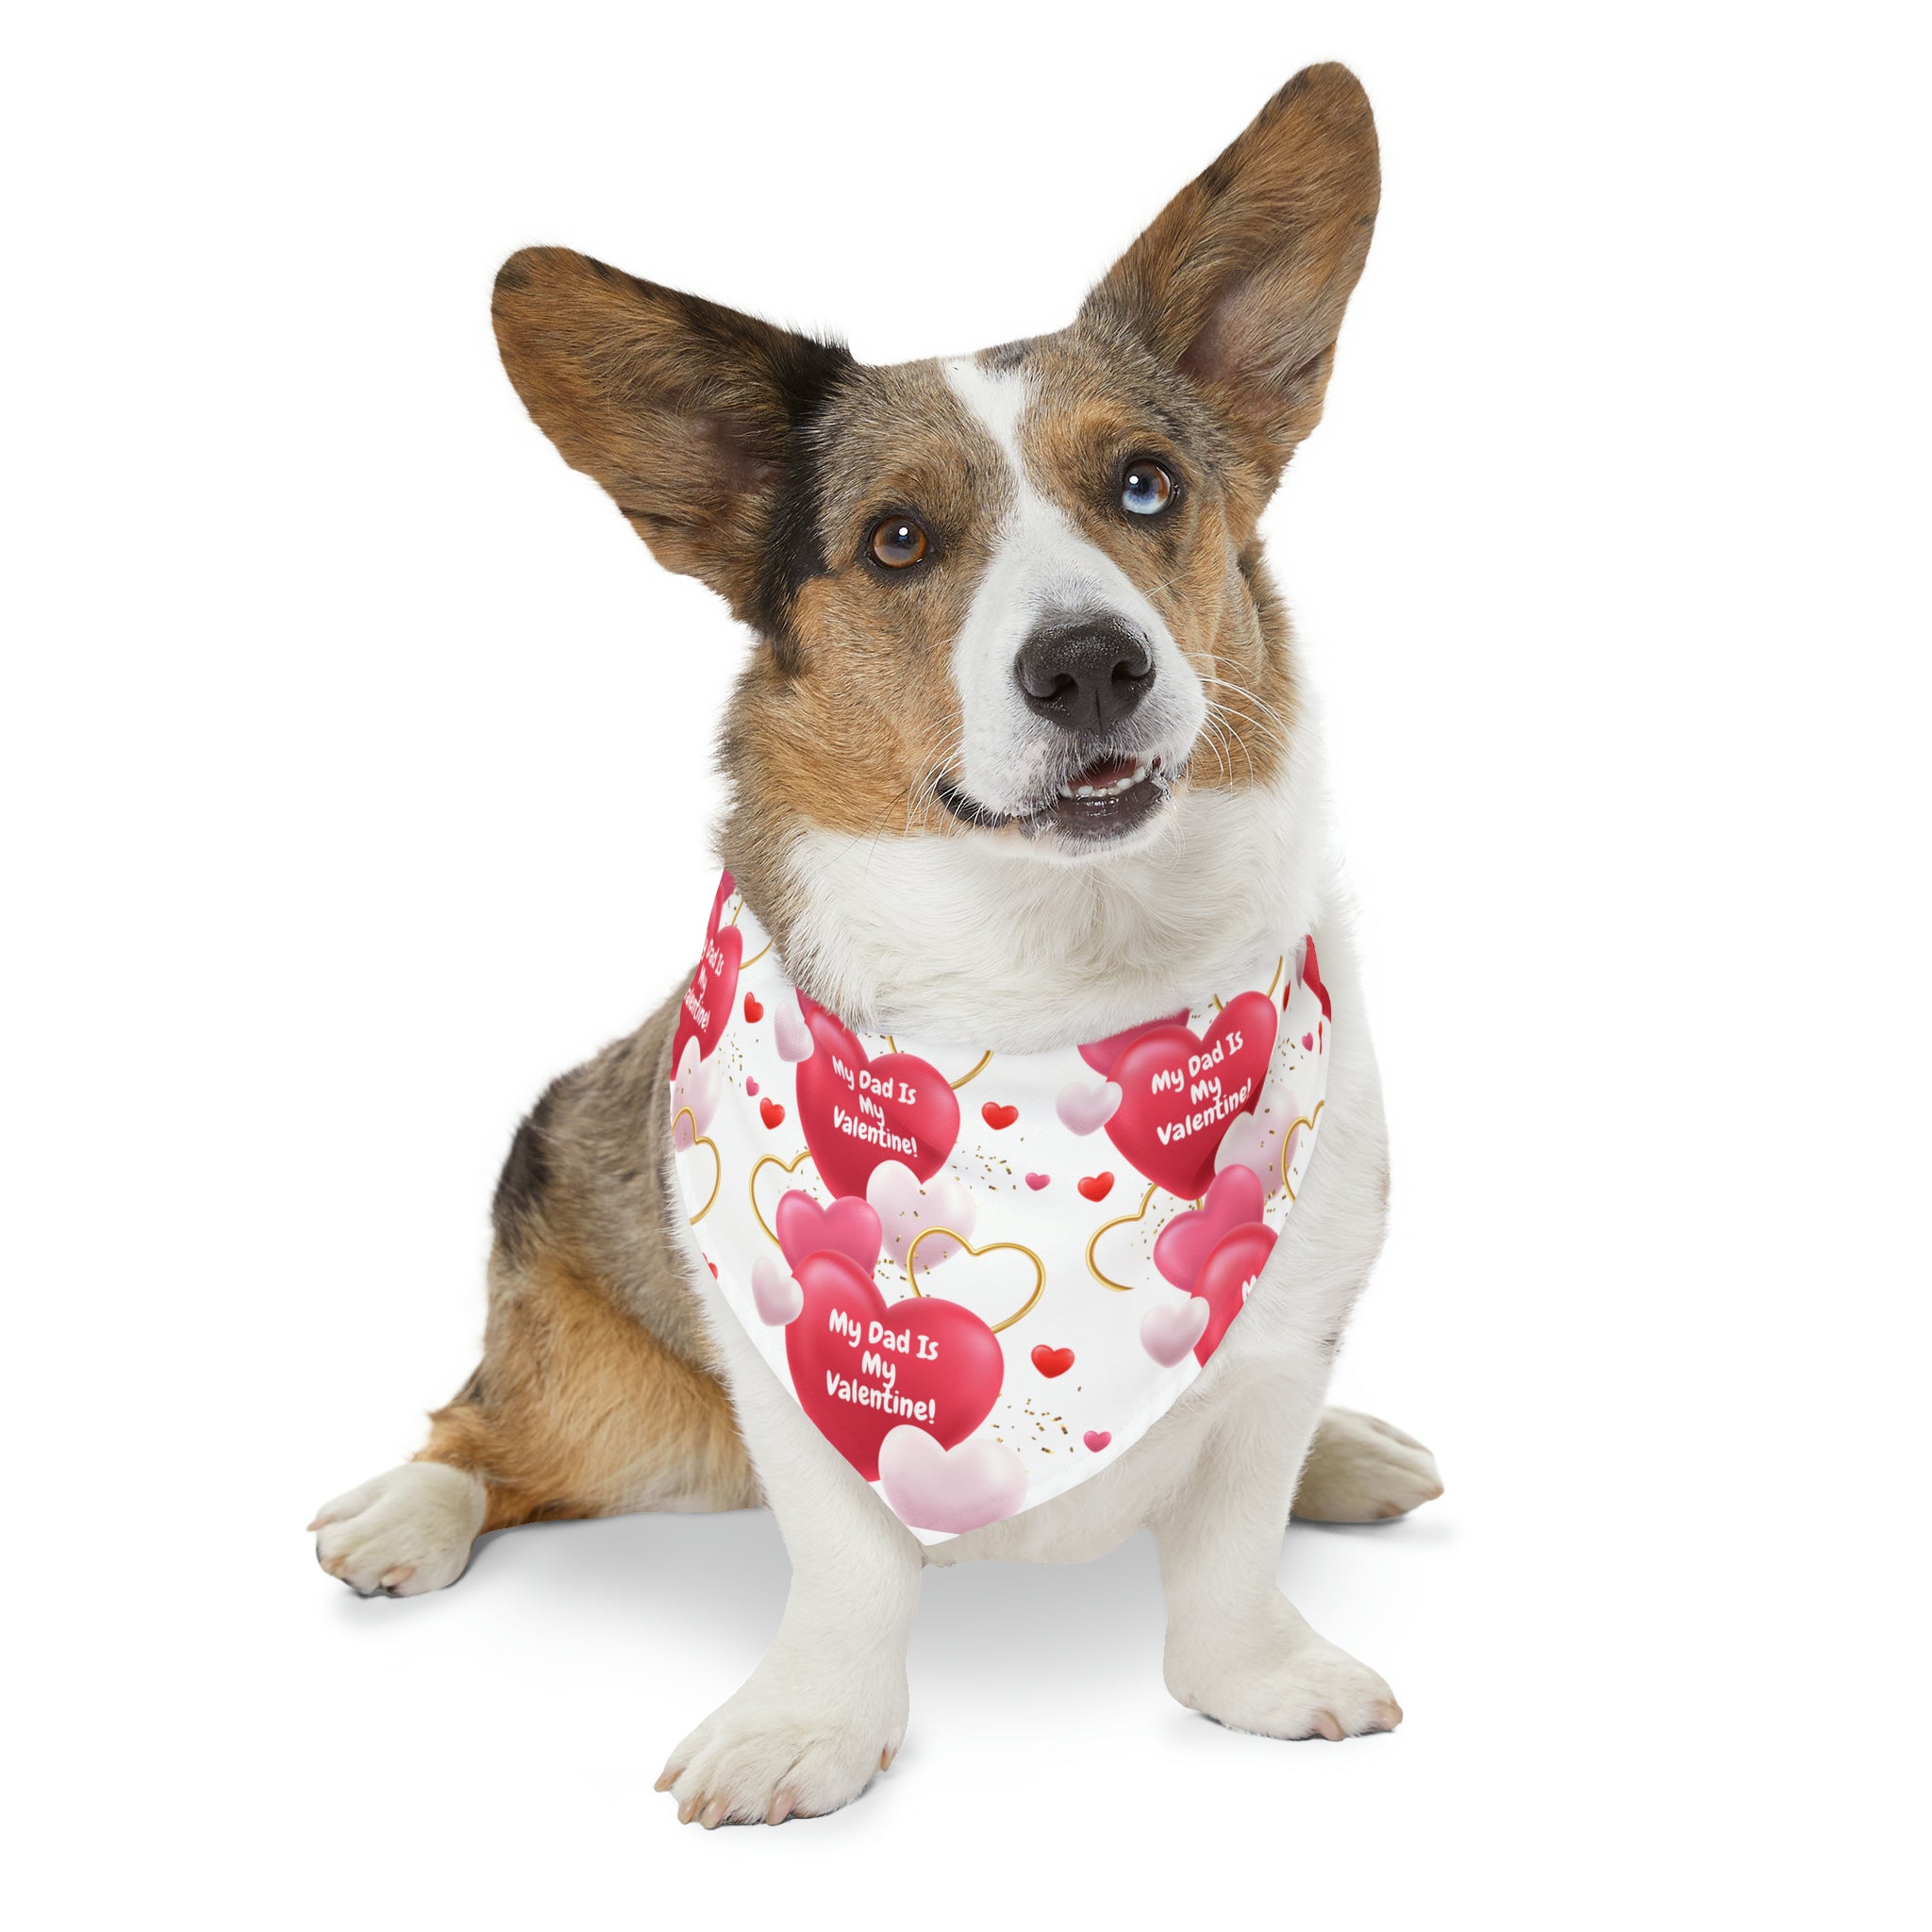 My Dad is My Valentine" - Adorable Valentine's Day Dog Bandana